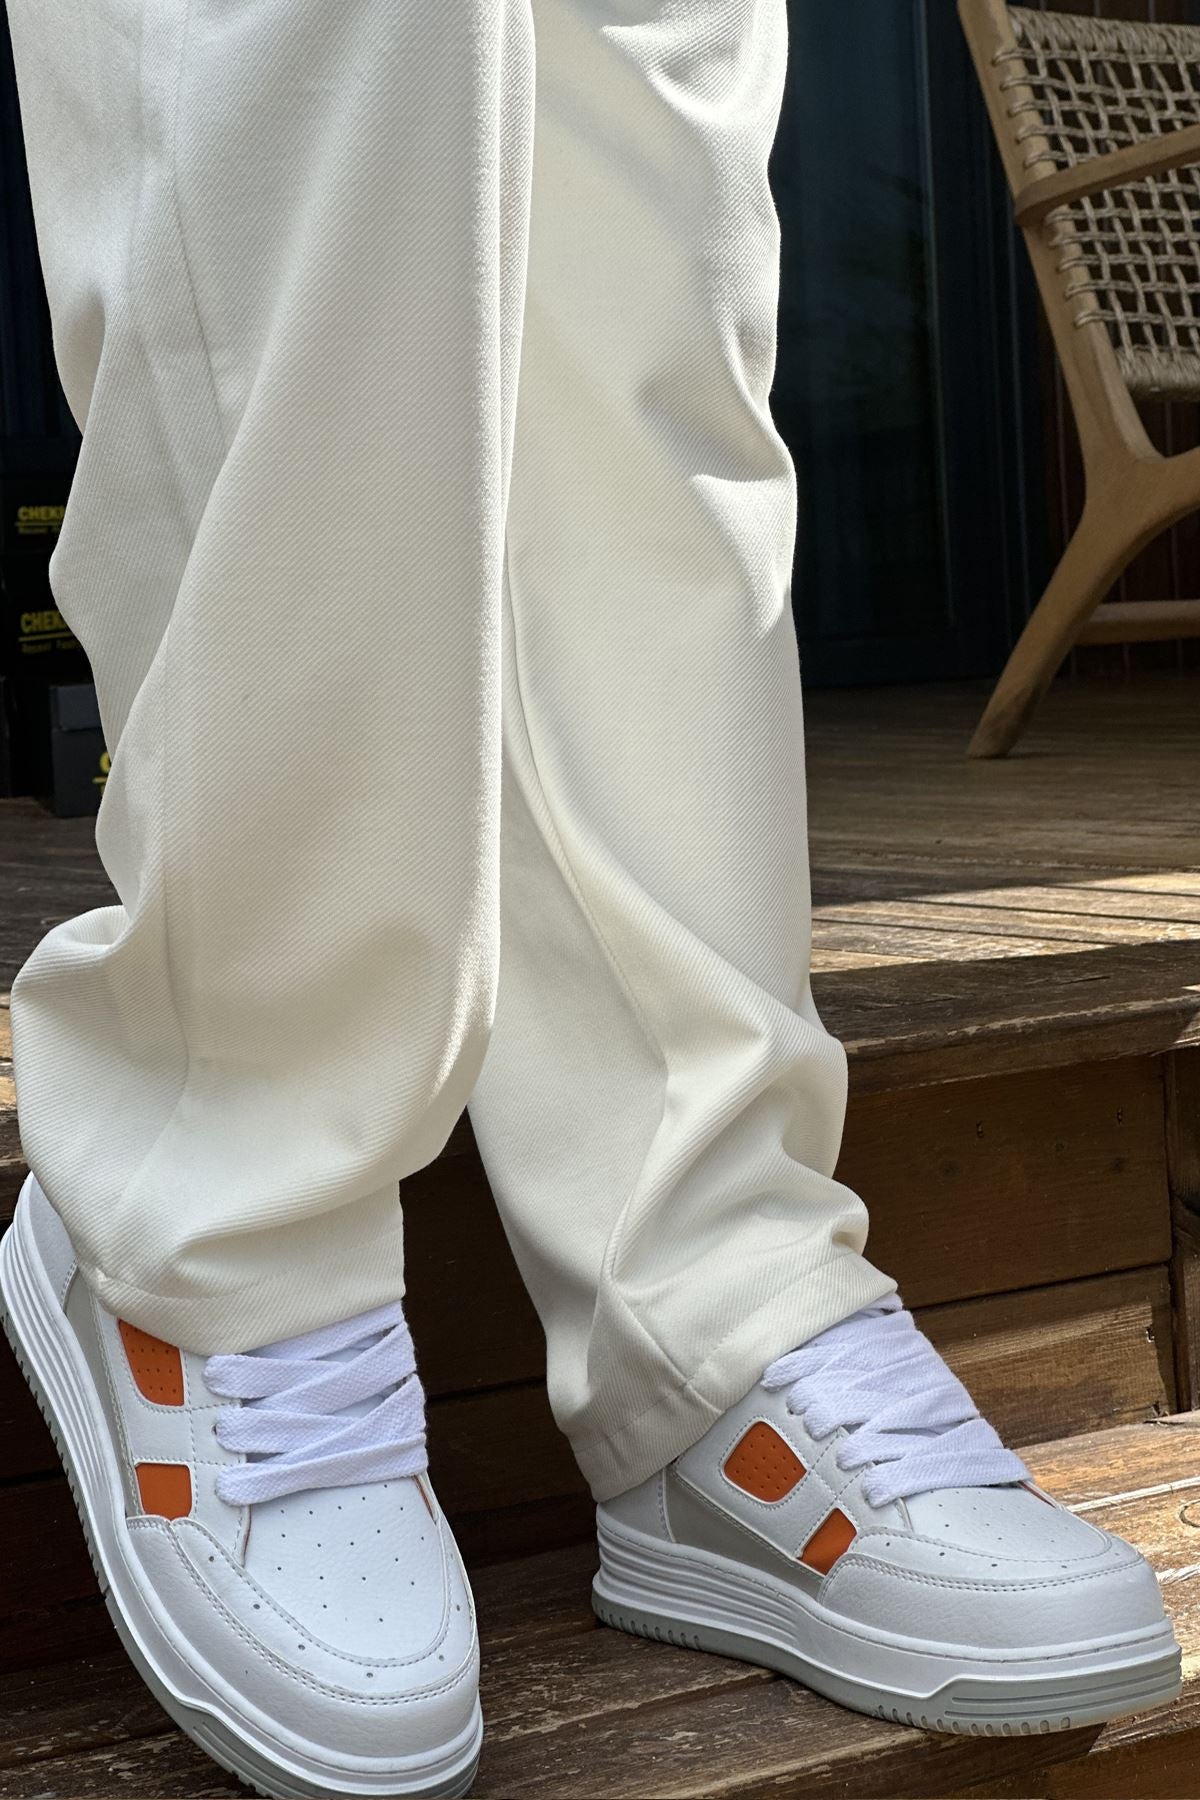 CH2410 CBT Avax Men's Sports Shoes White/Orange - STREETMODE™